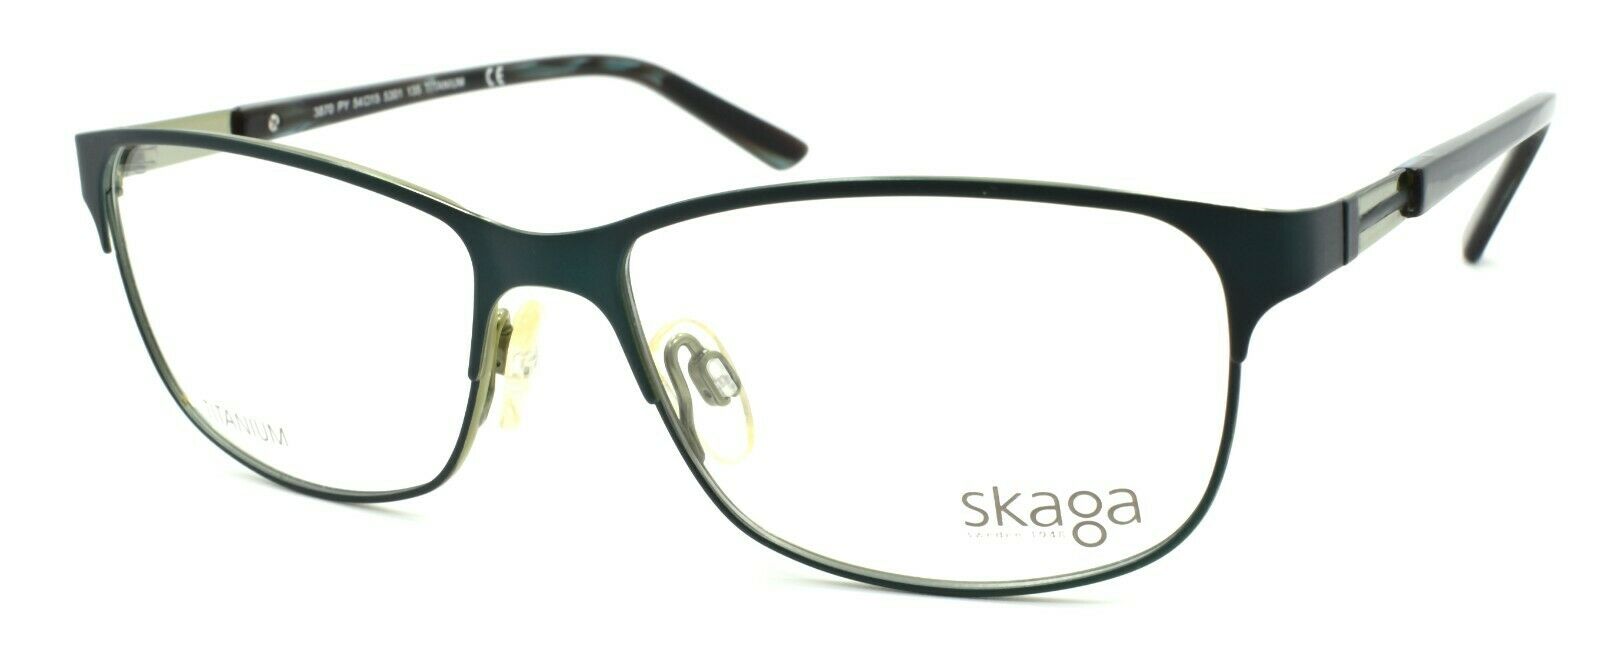 1-Skaga 3870 Py 5301 Women's Eyeglasses Frames TITANIUM 54-15-135 Green-IKSpecs